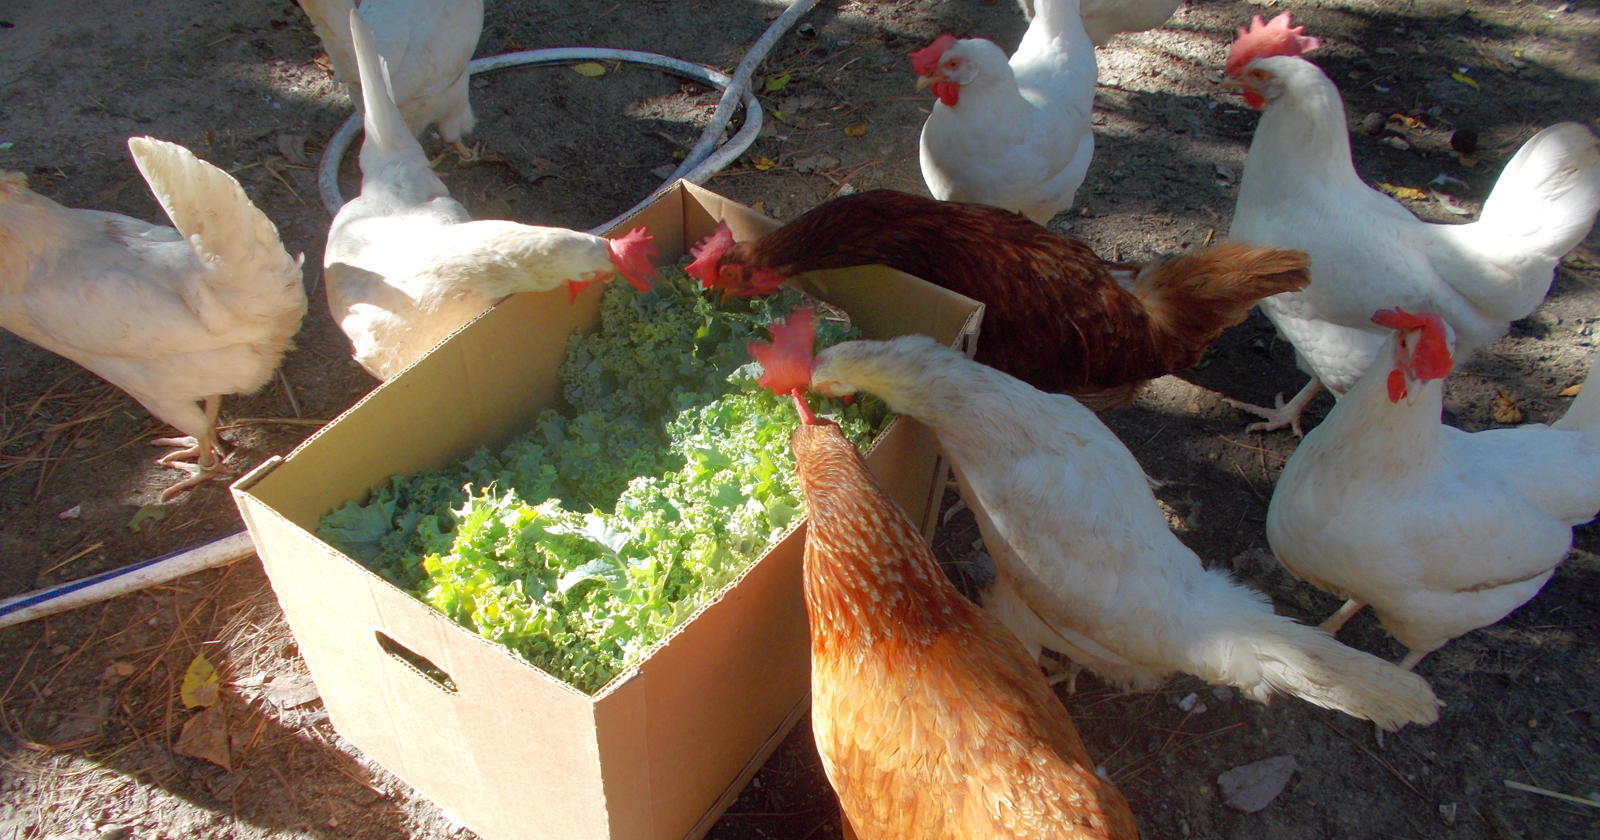 hens eating greens